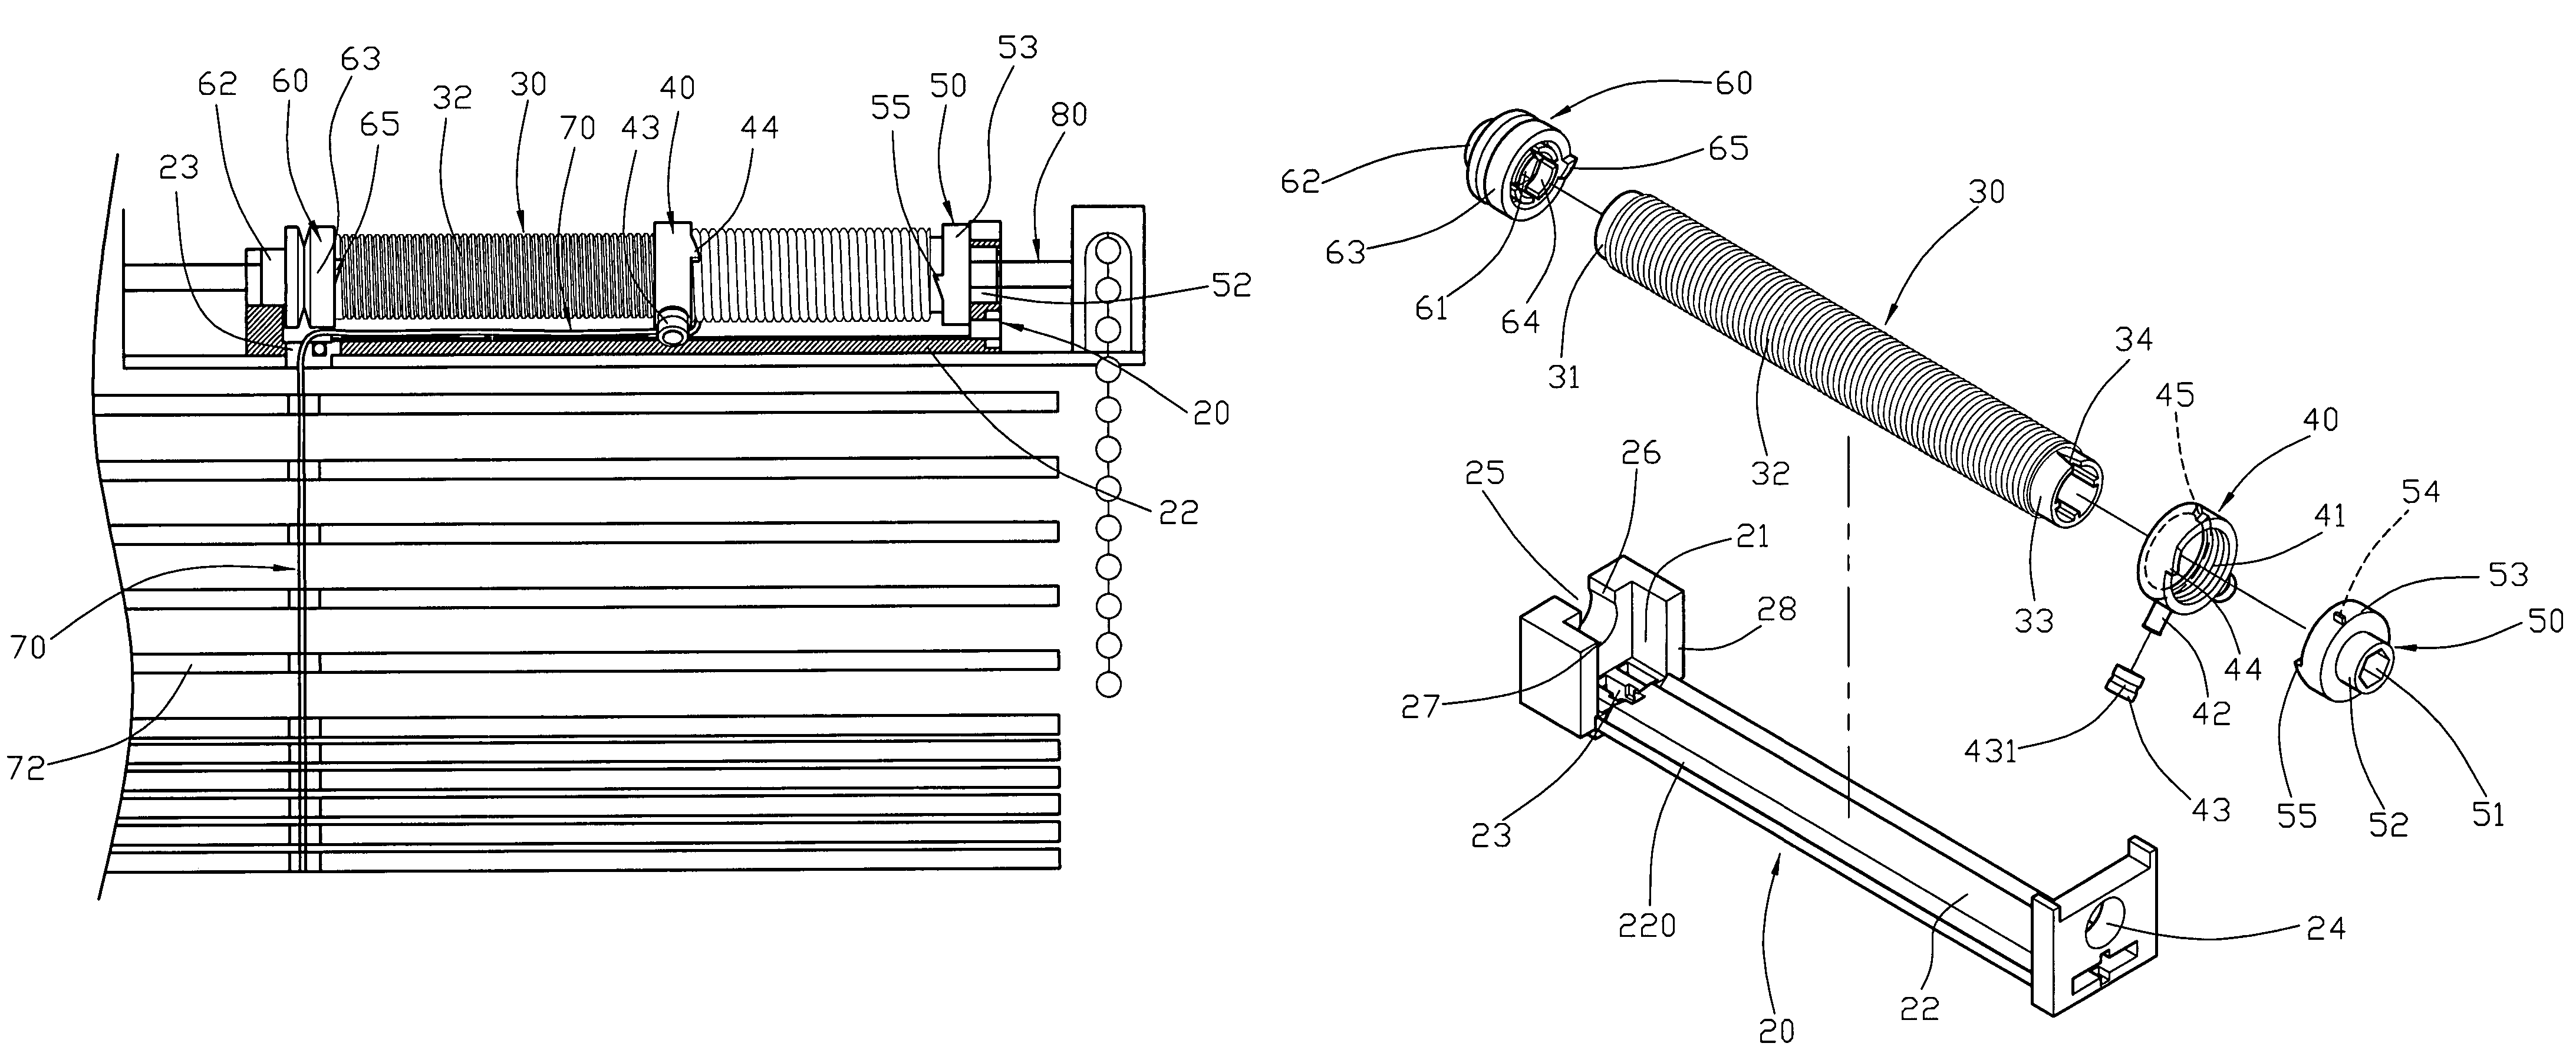 Winding mechanism for a window blind